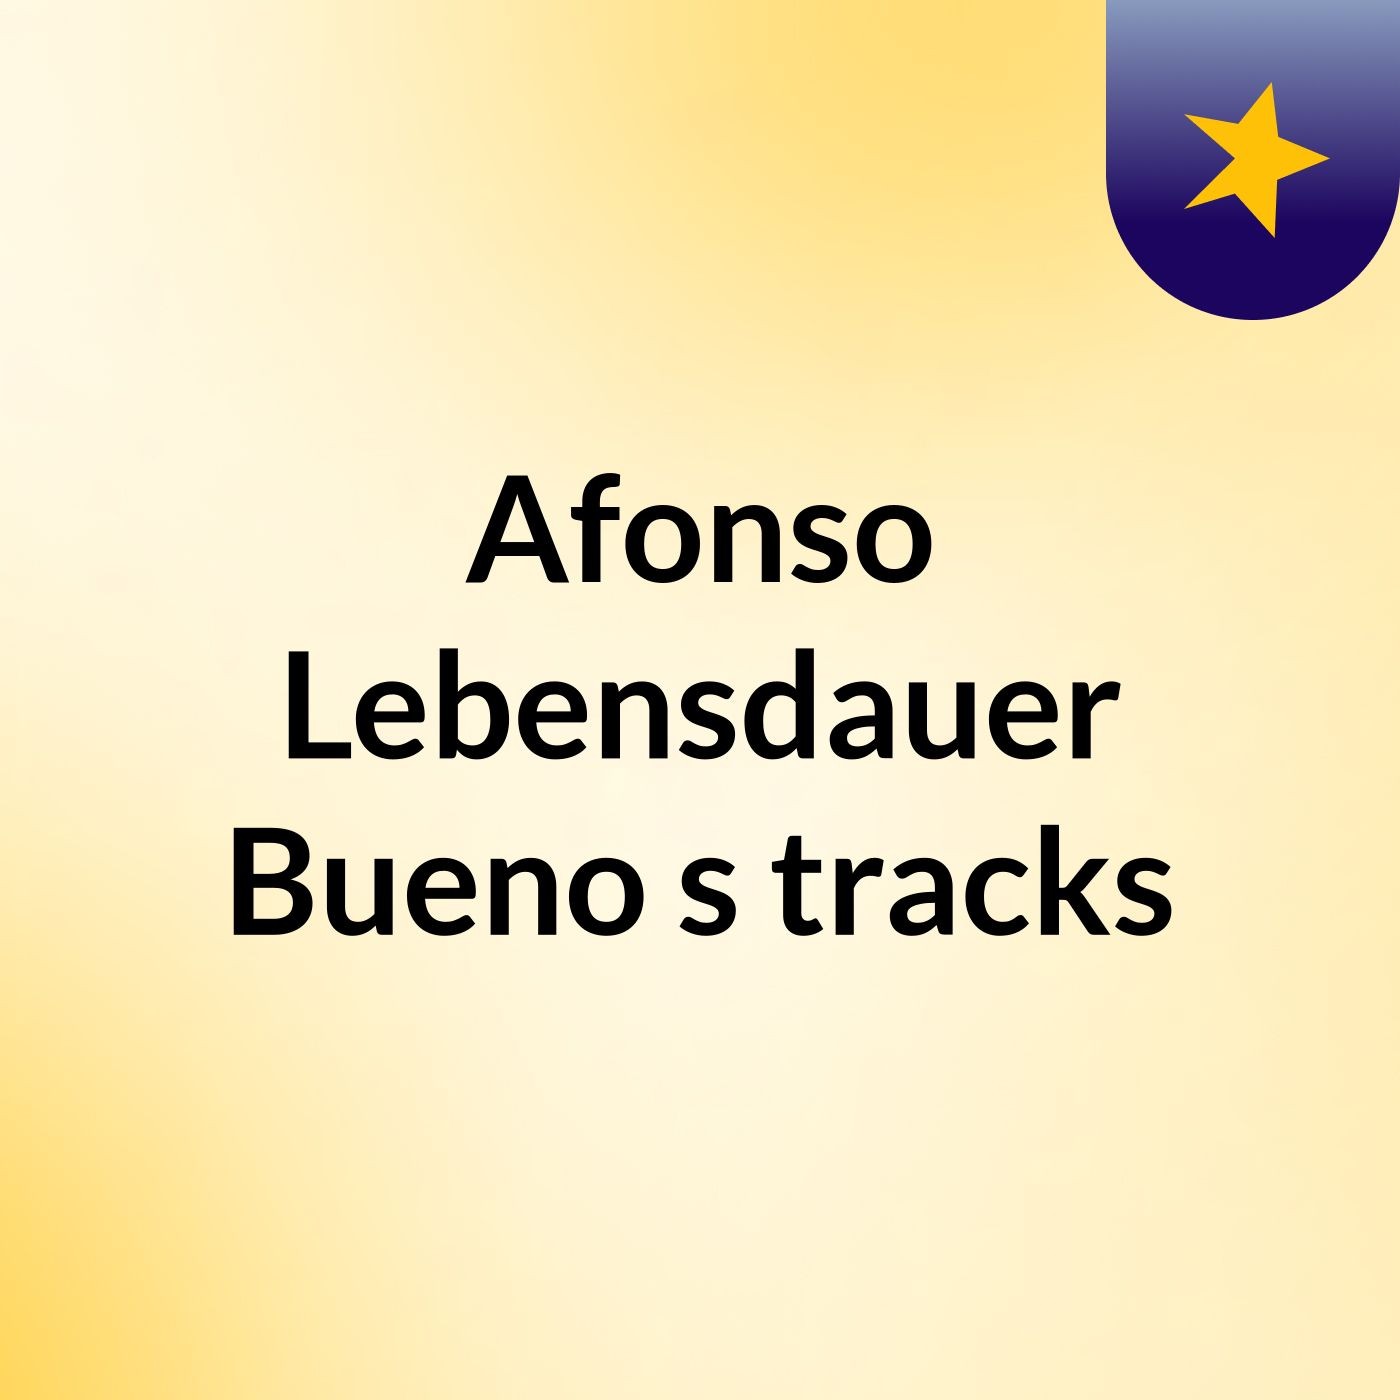 Afonso Lebensdauer Bueno's tracks